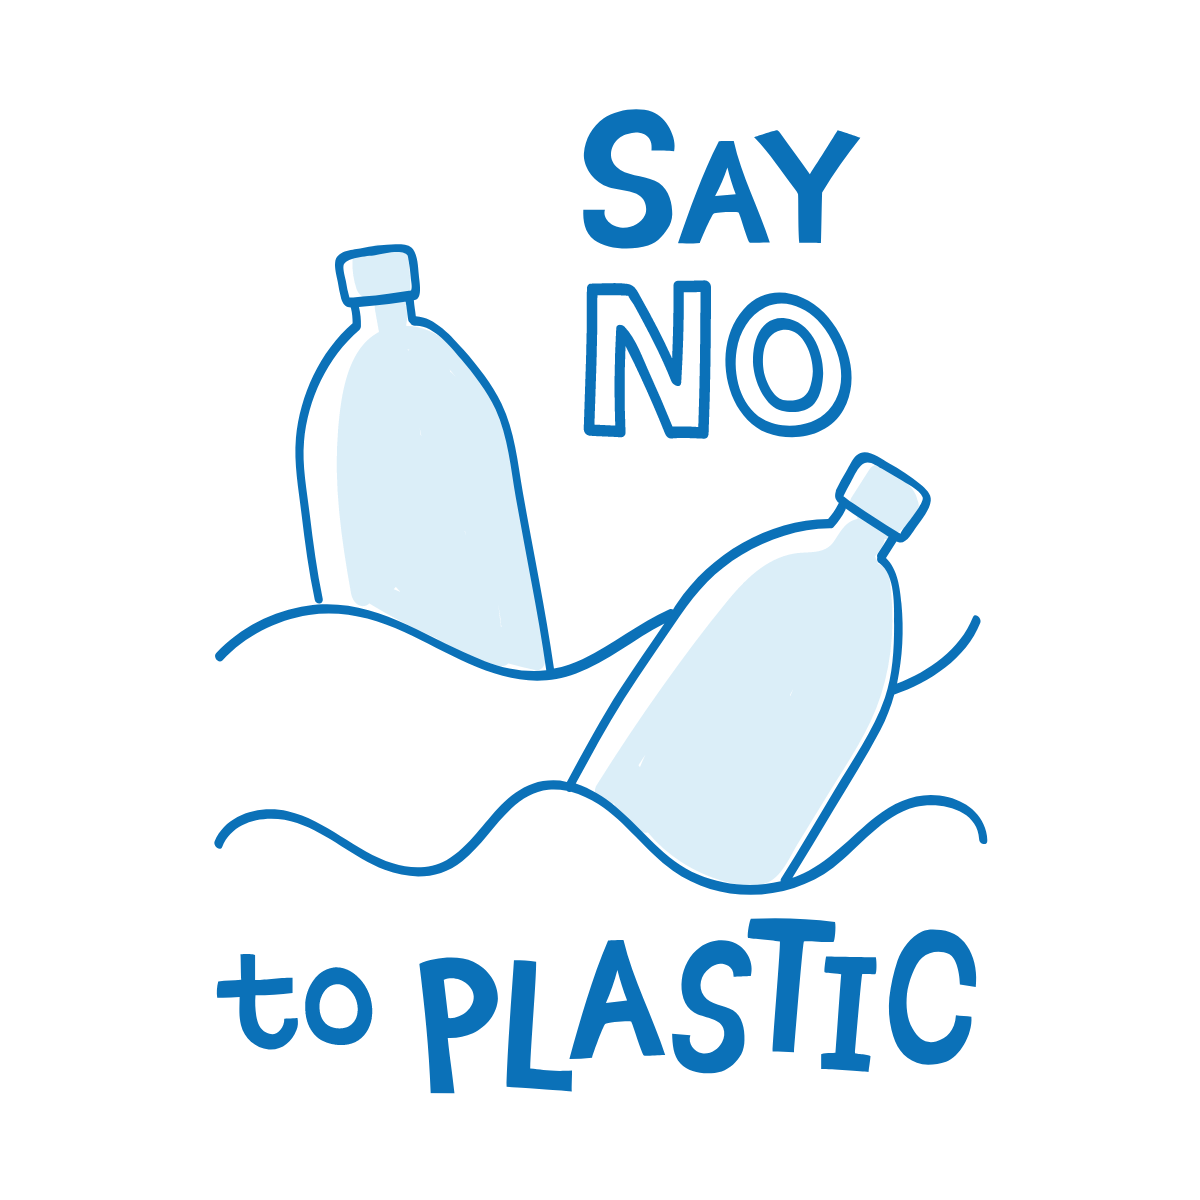 So no to plastic